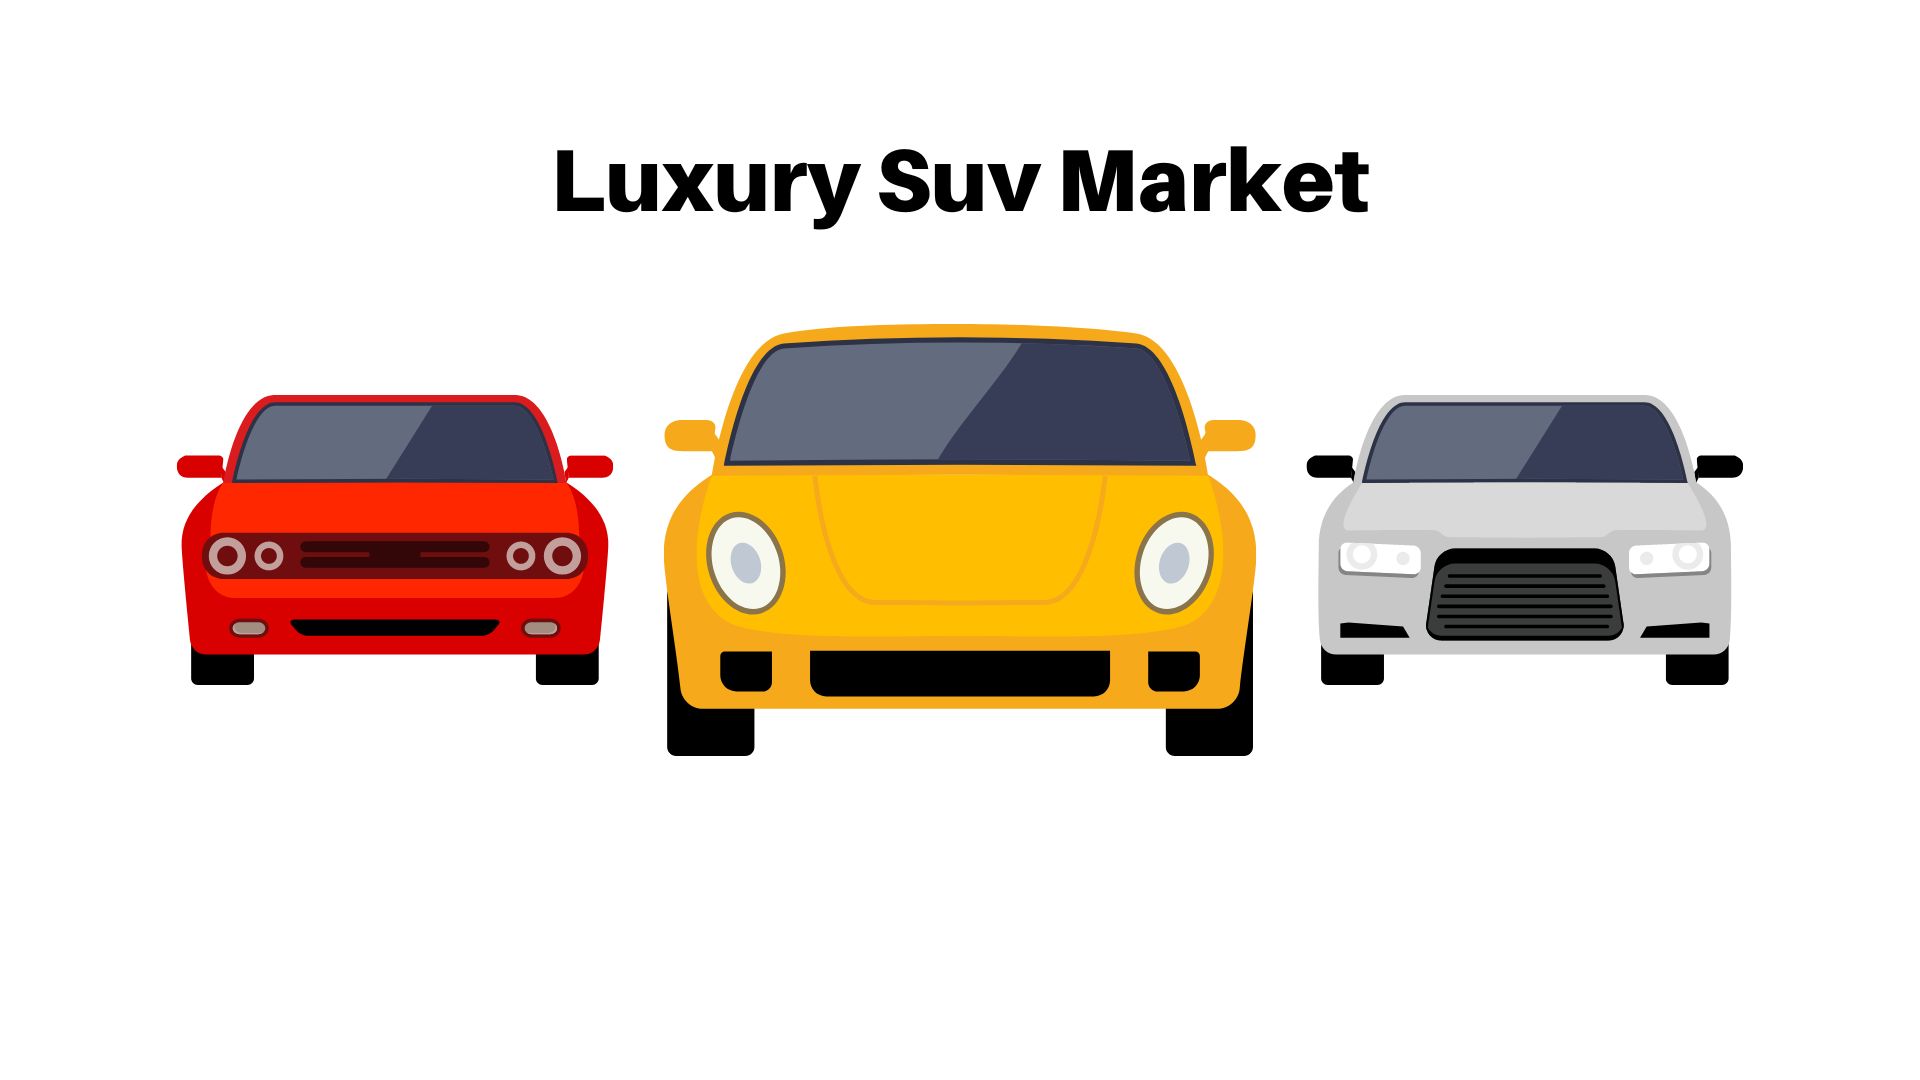 Global Luxury Suv Market Size estimated grow USD 46.23 Billion By 2032